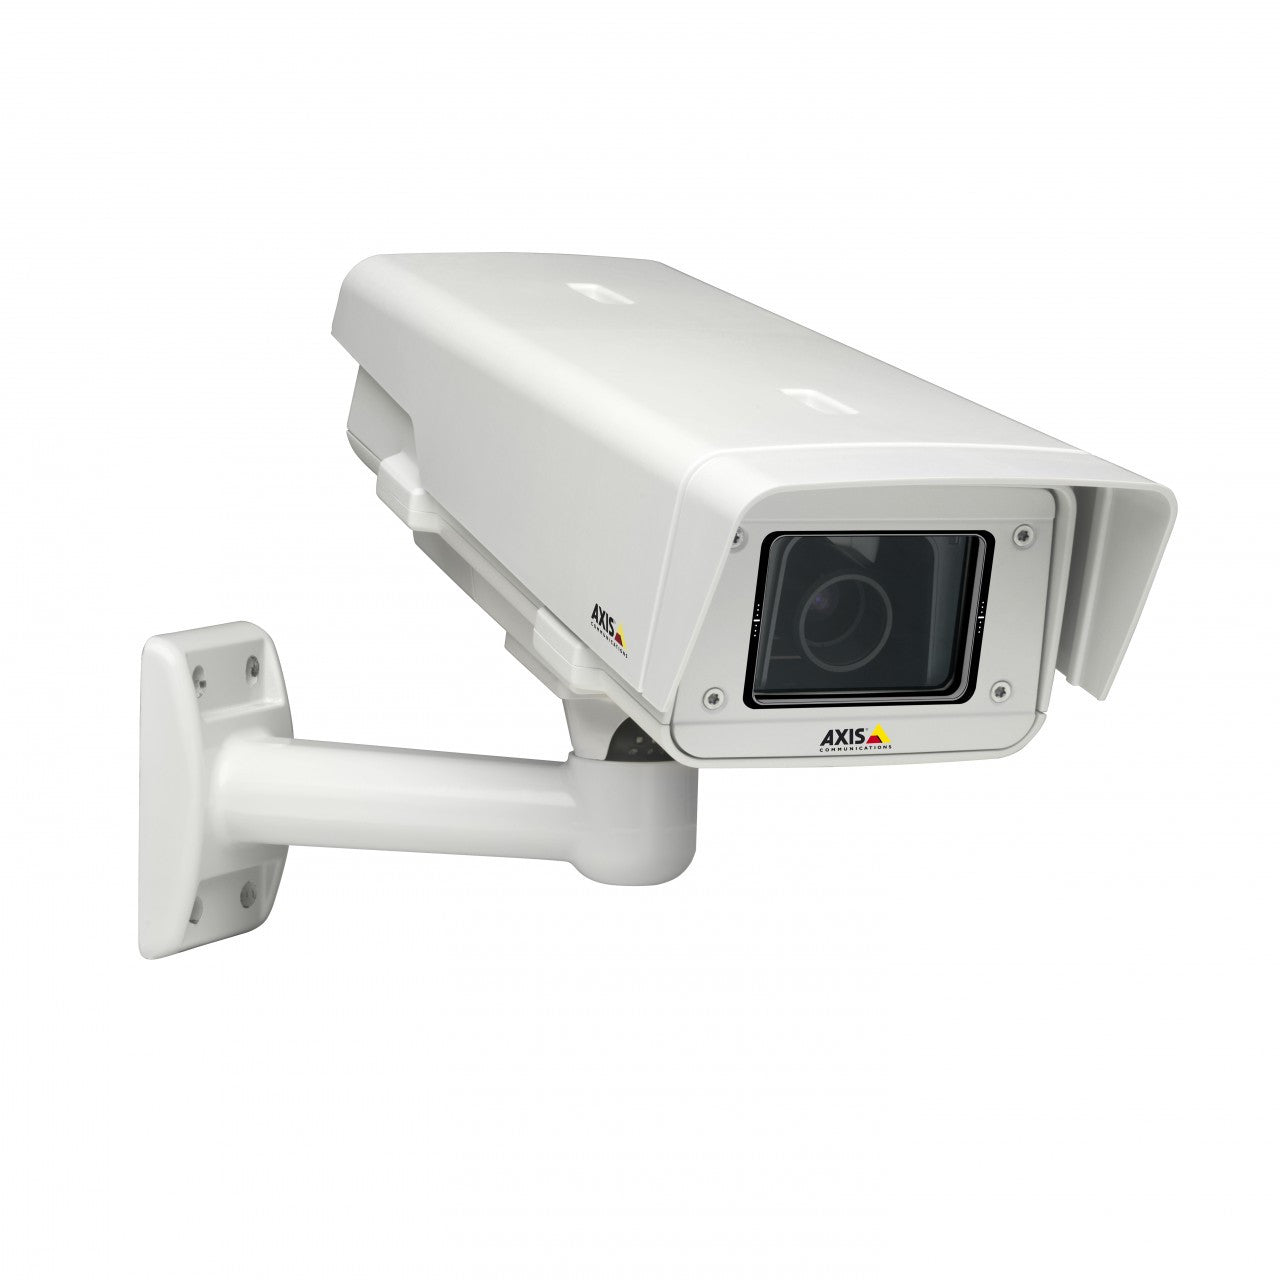 AXIS P1354-E (0528-001) Network Camera